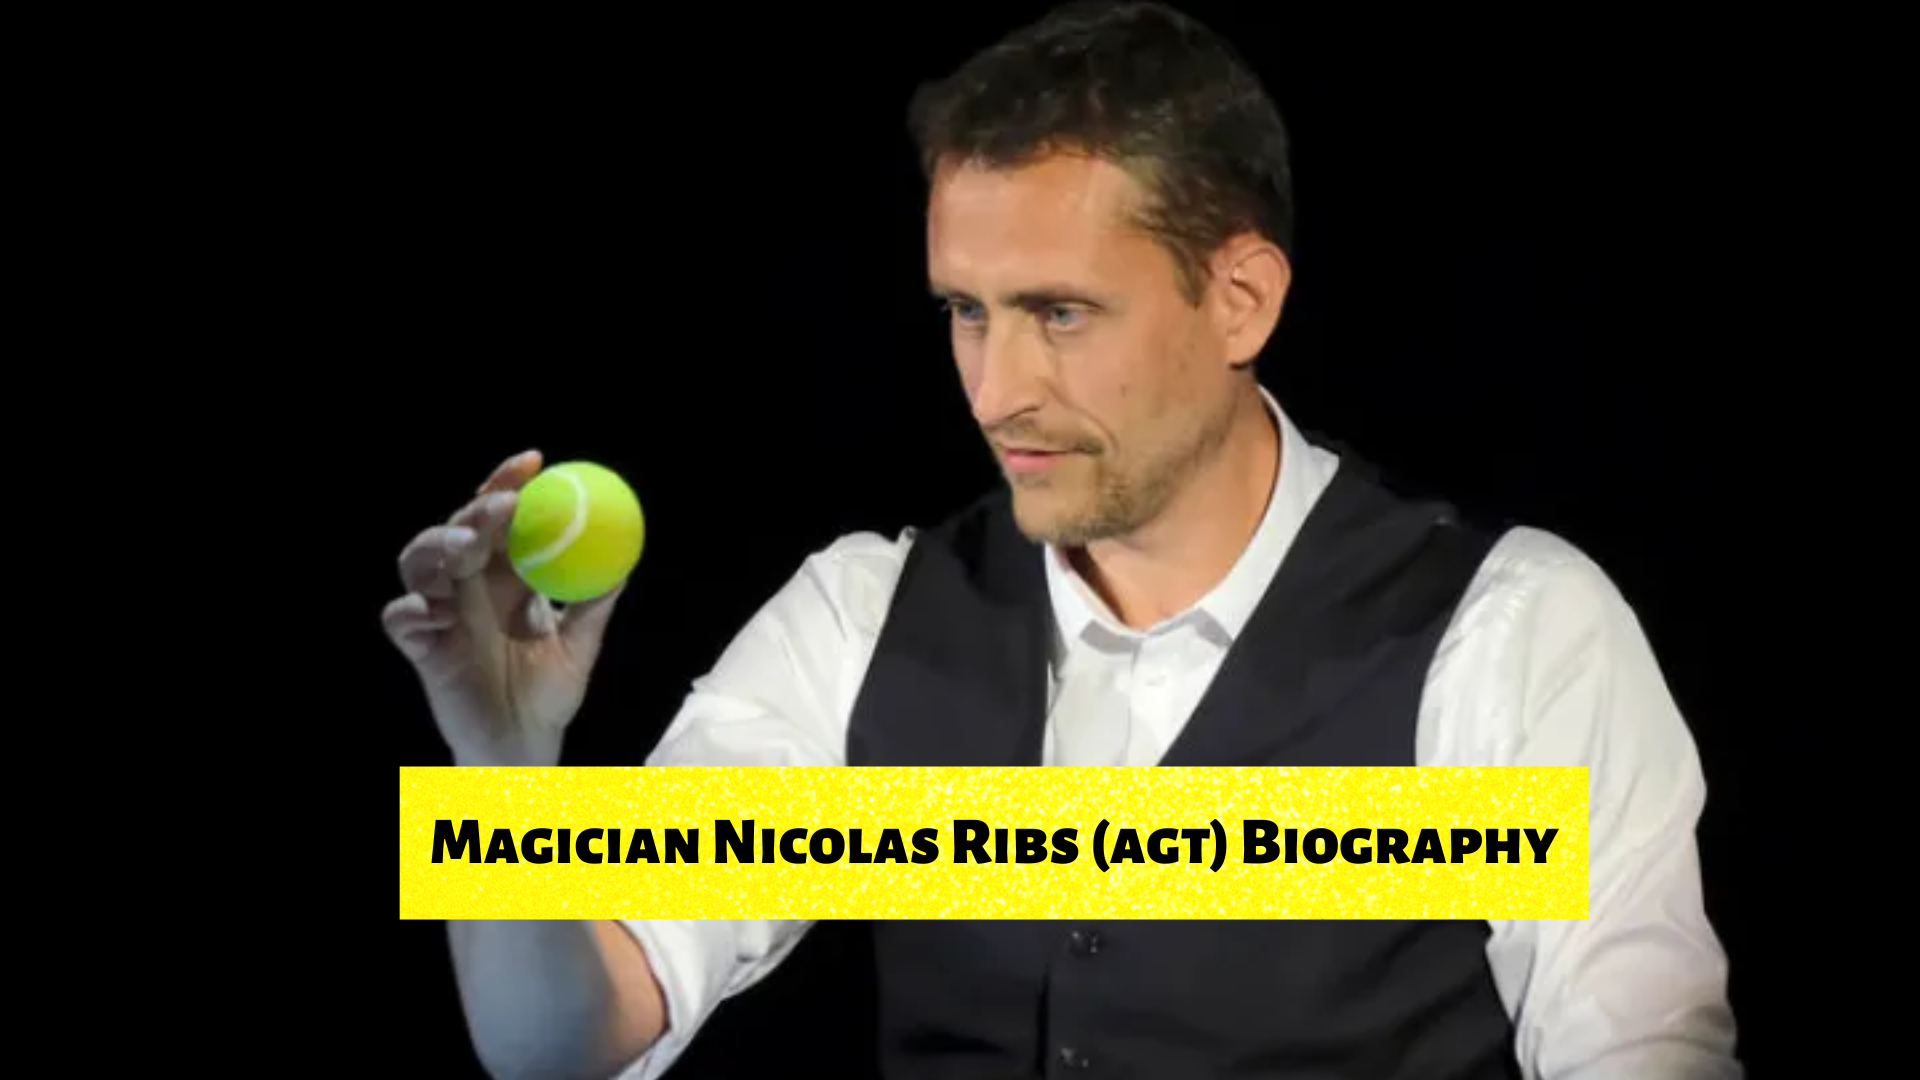 Magician Nicolas Ribs Biography